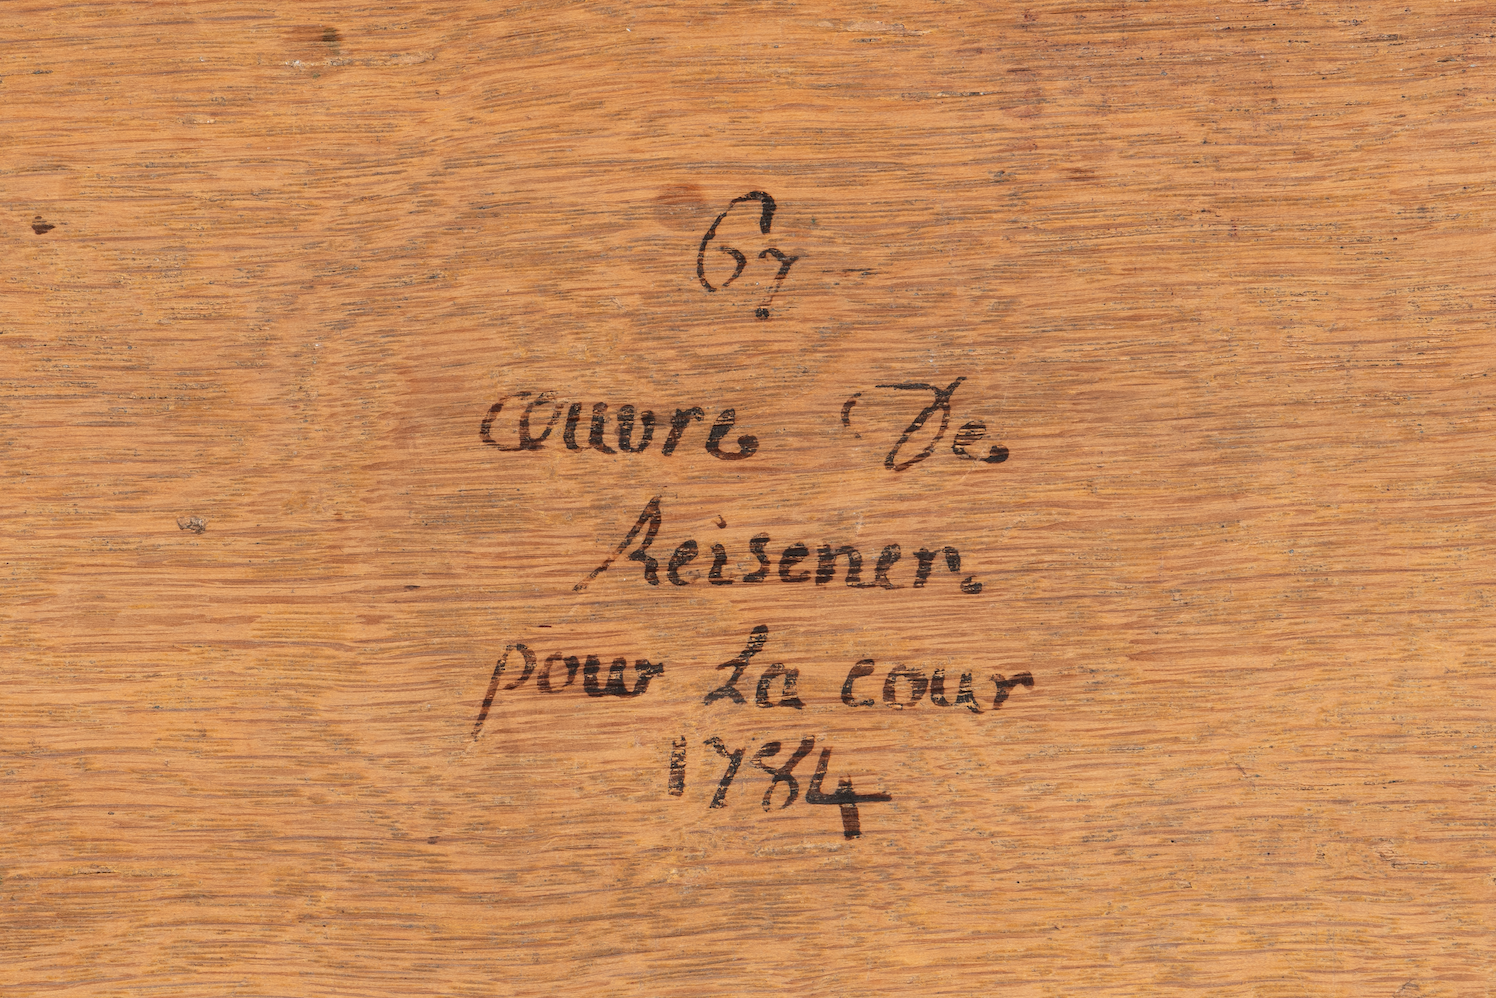 inscription inside the drawer